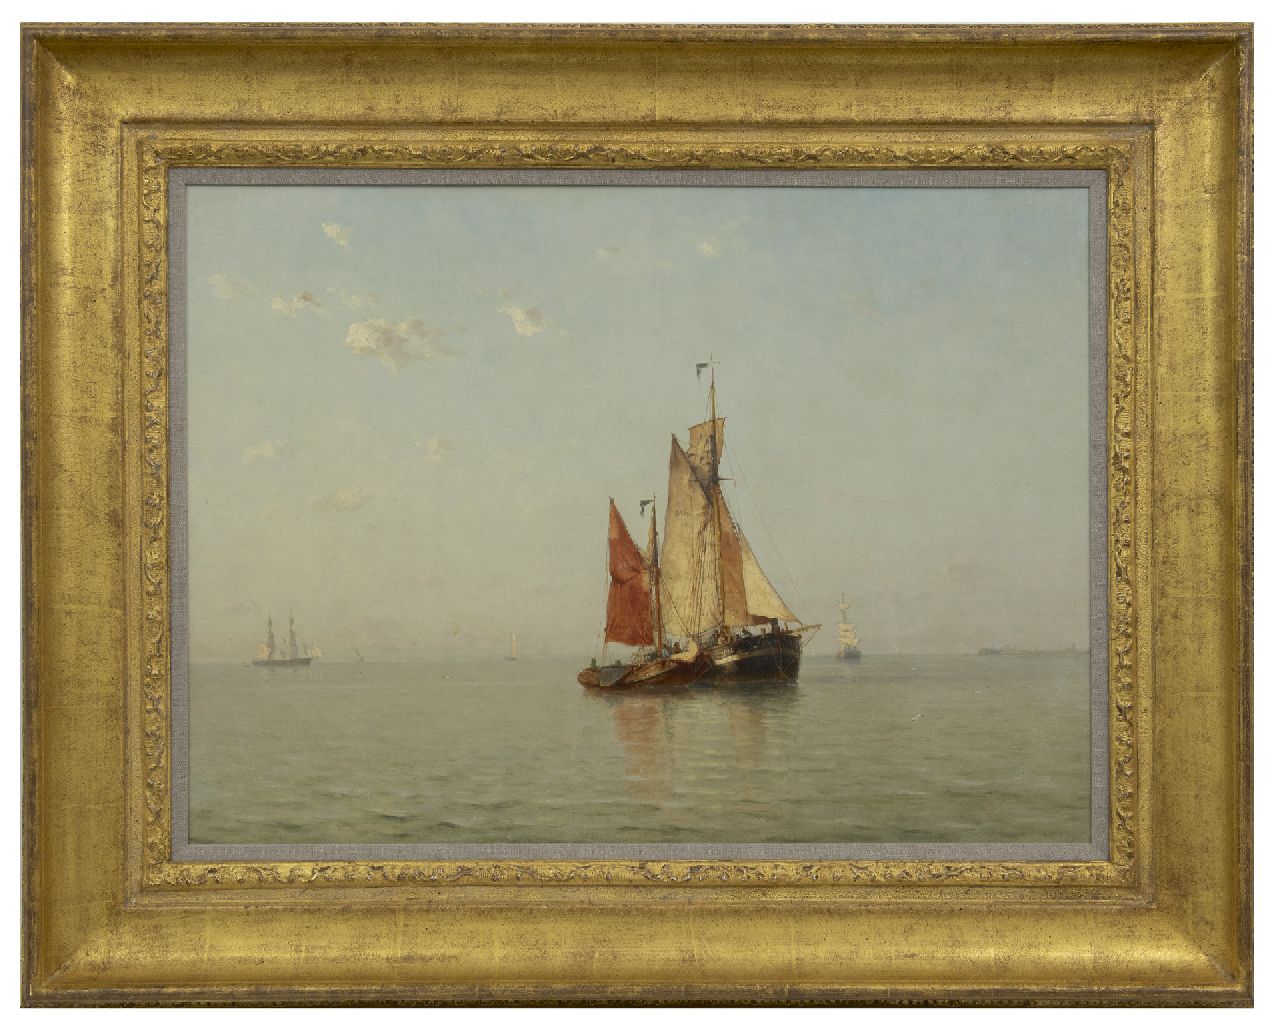 Schütz J.F.  | Jan Frederik Schütz, Sailing ships at anchor on a calm sea, Zeeland, oil on canvas 52.5 x 71.0 cm, signed l.l. and dated '86